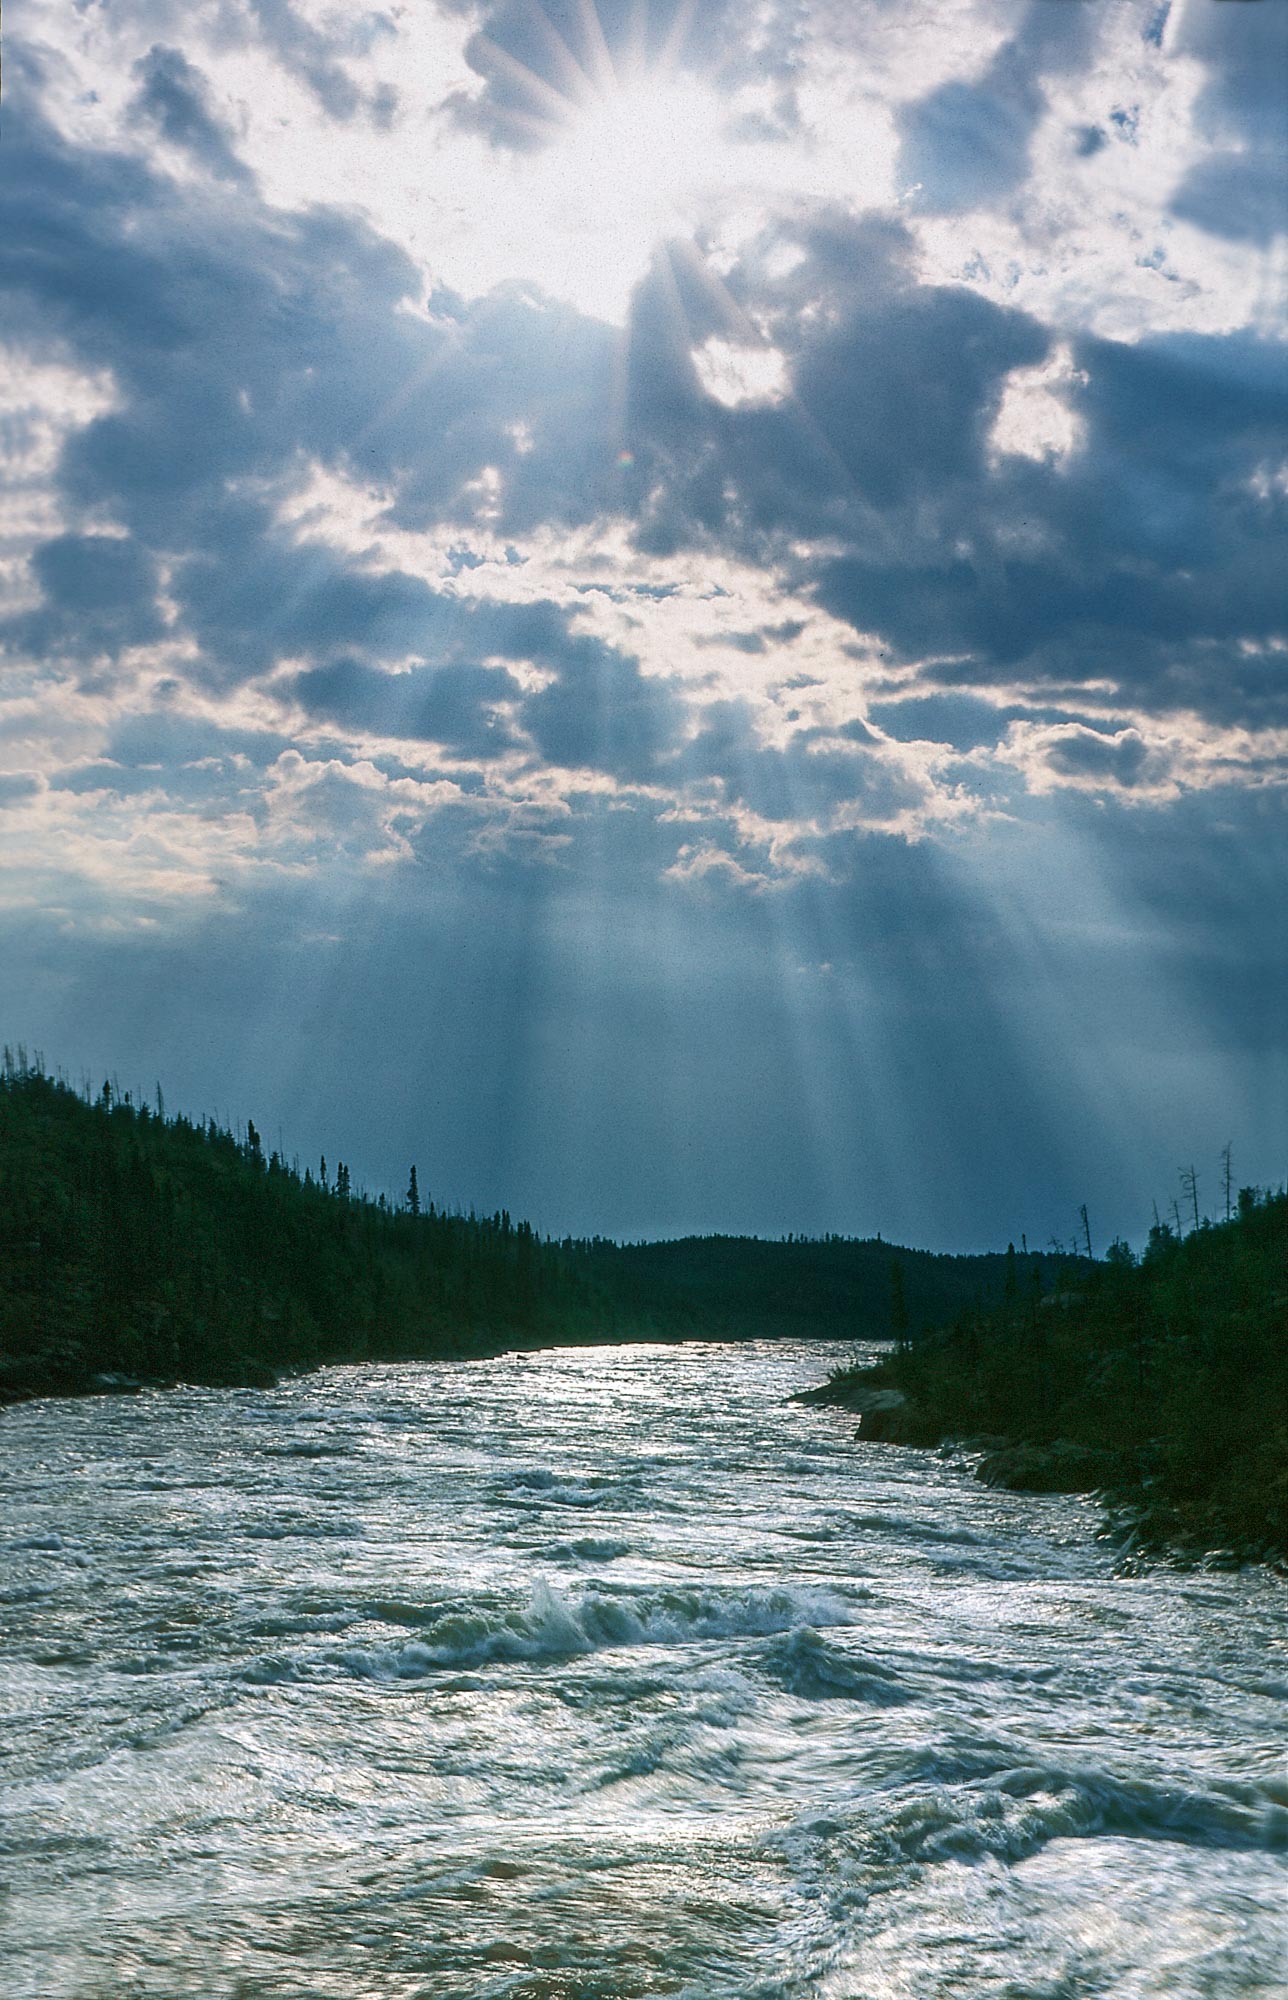 Endangered Canadian rivers